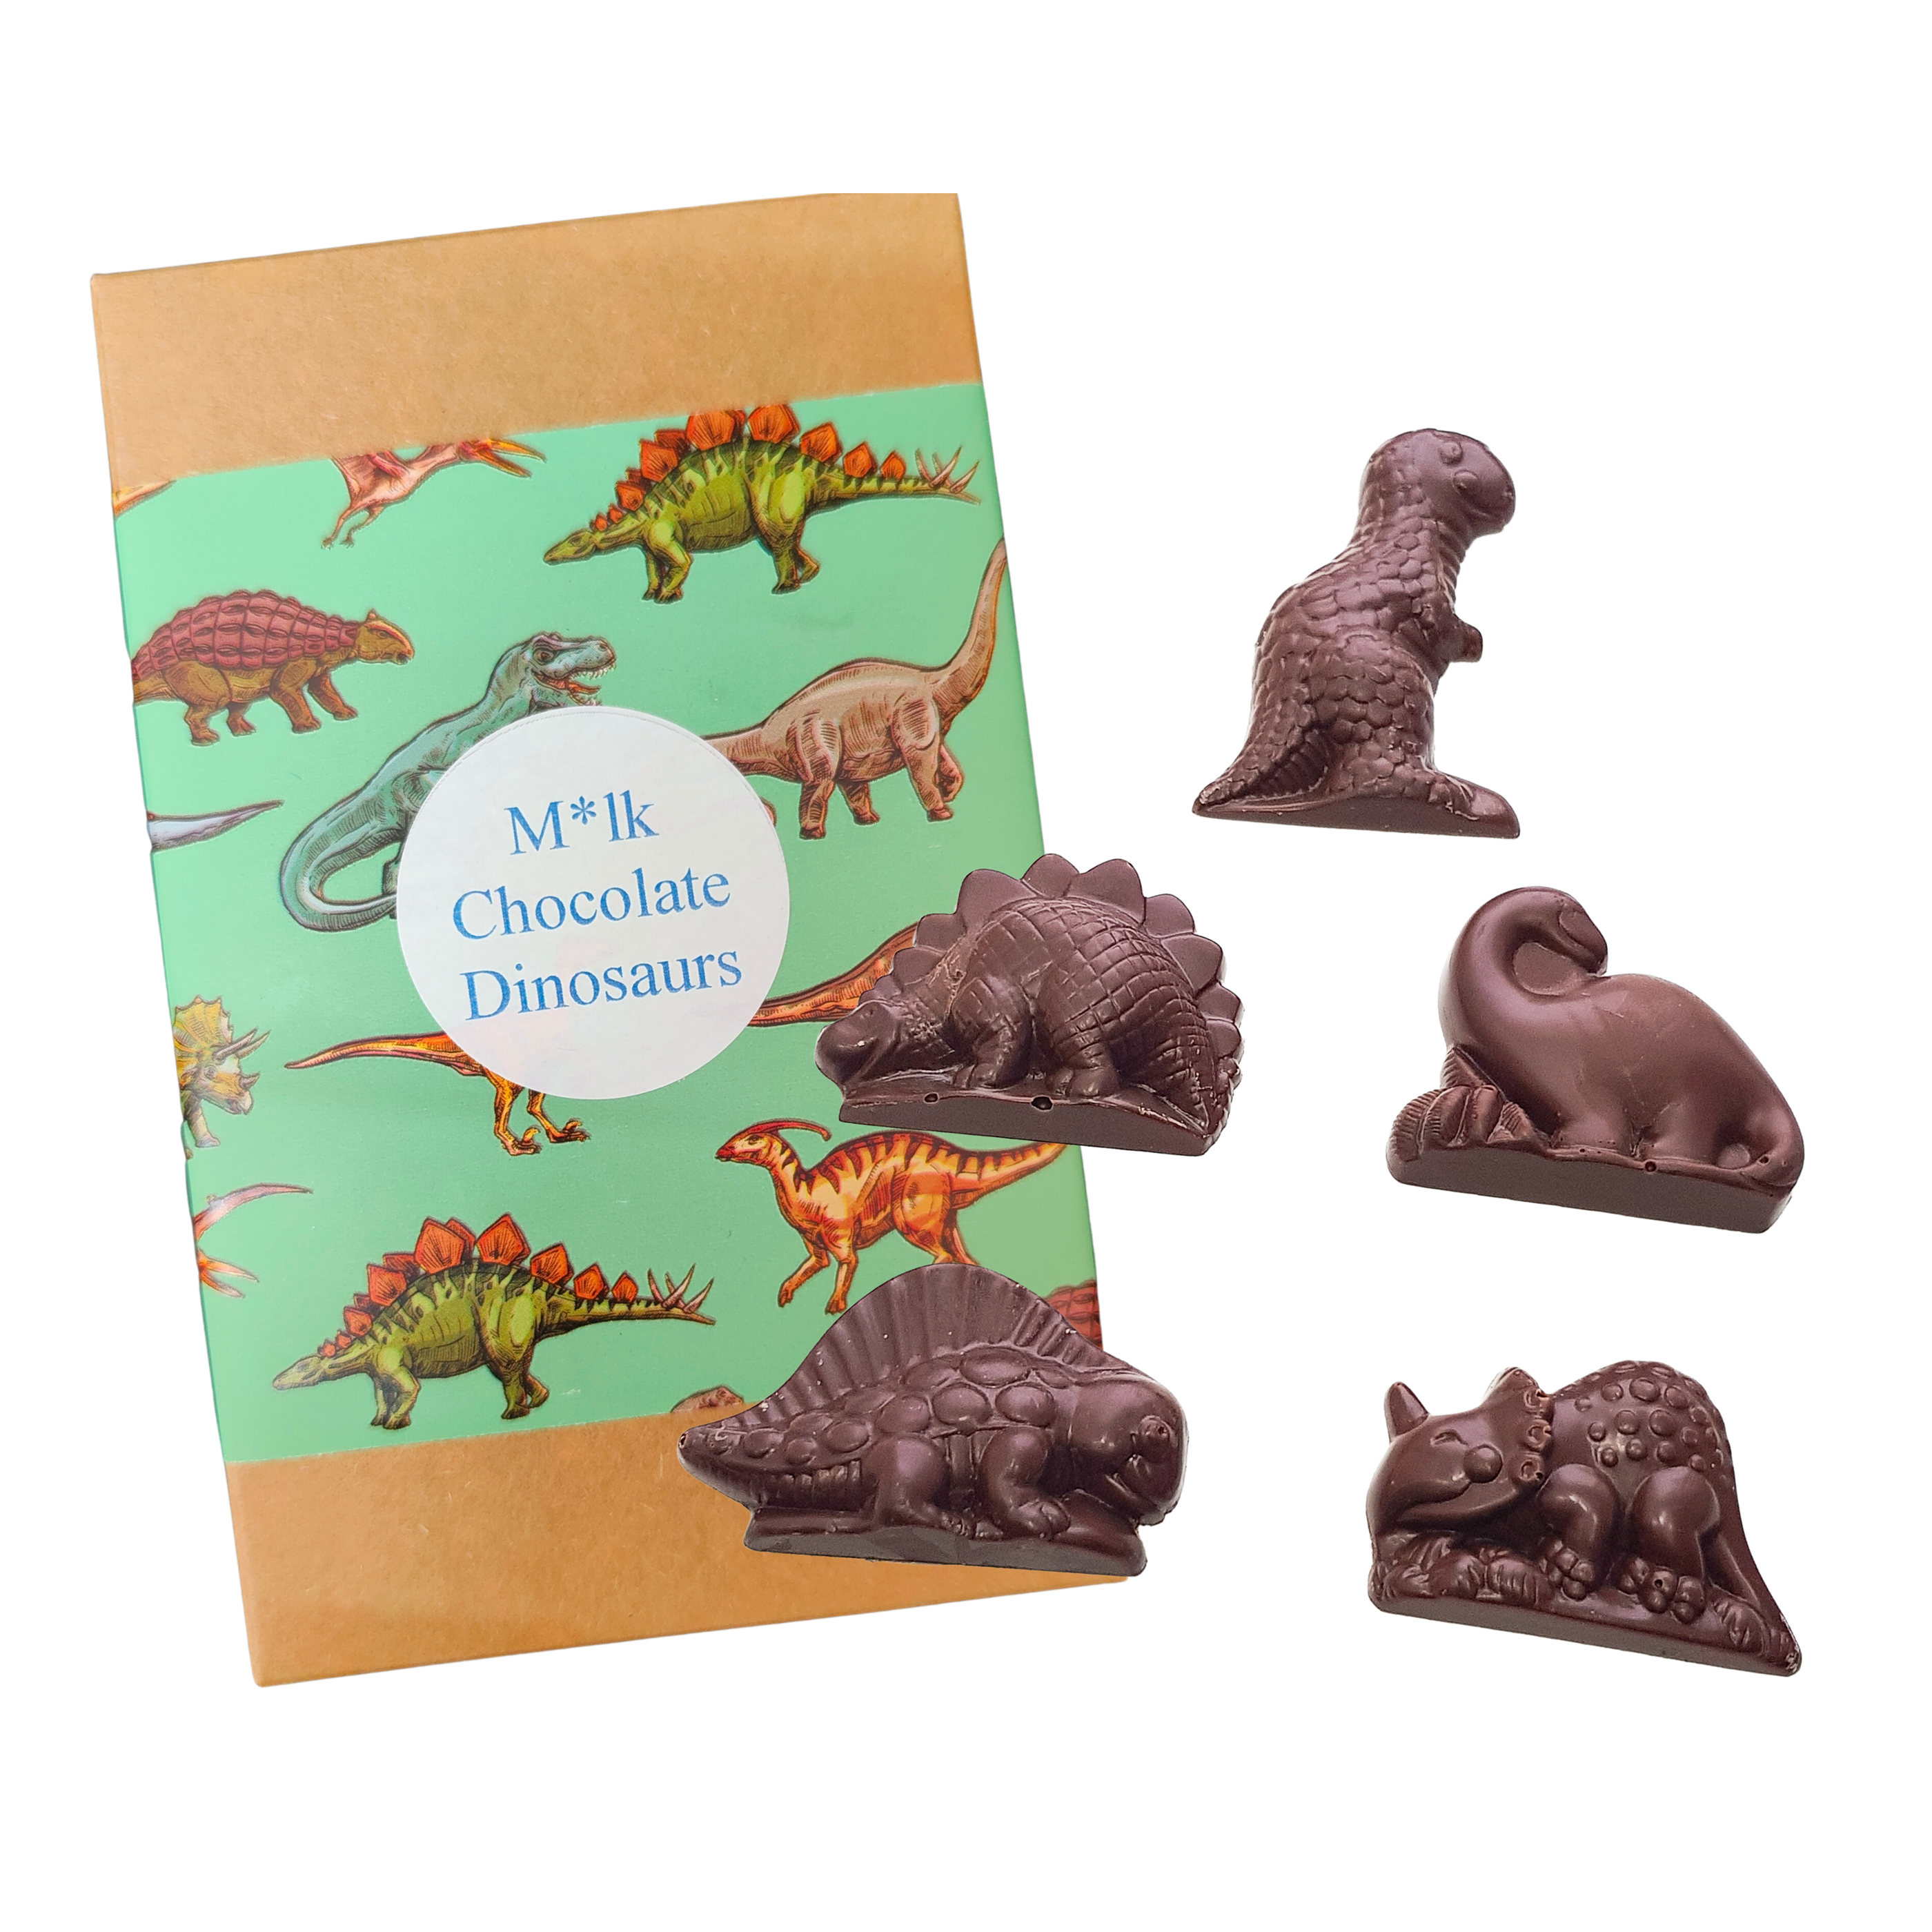 Dinosaurs in M*lk Chocolate